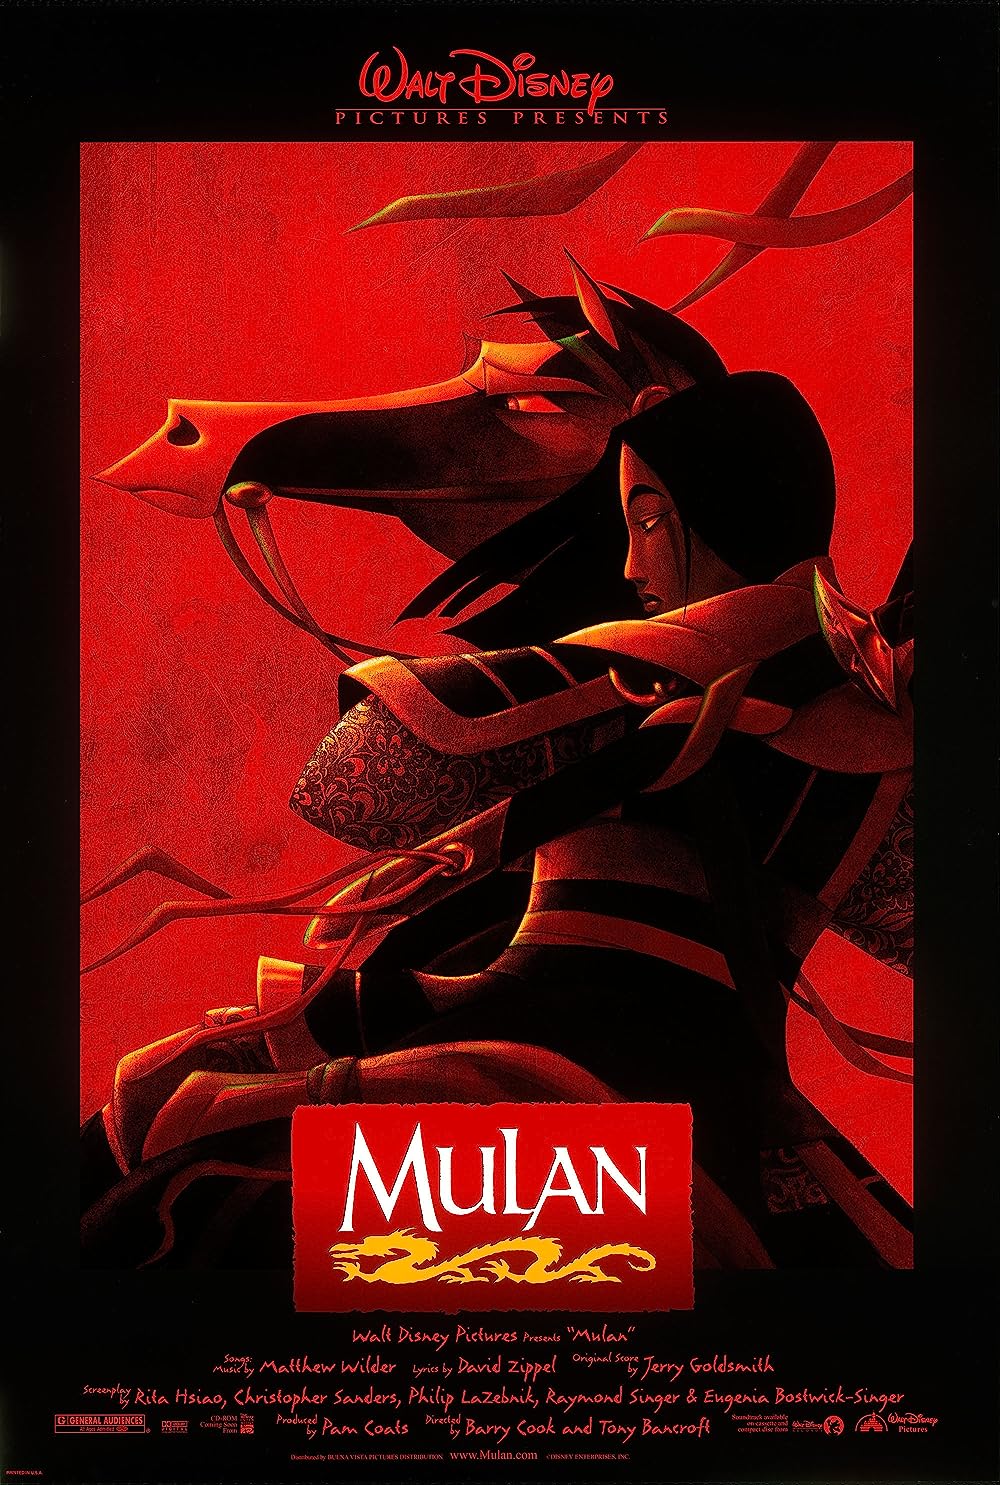 FULL MOVIE: Mulan (1998)